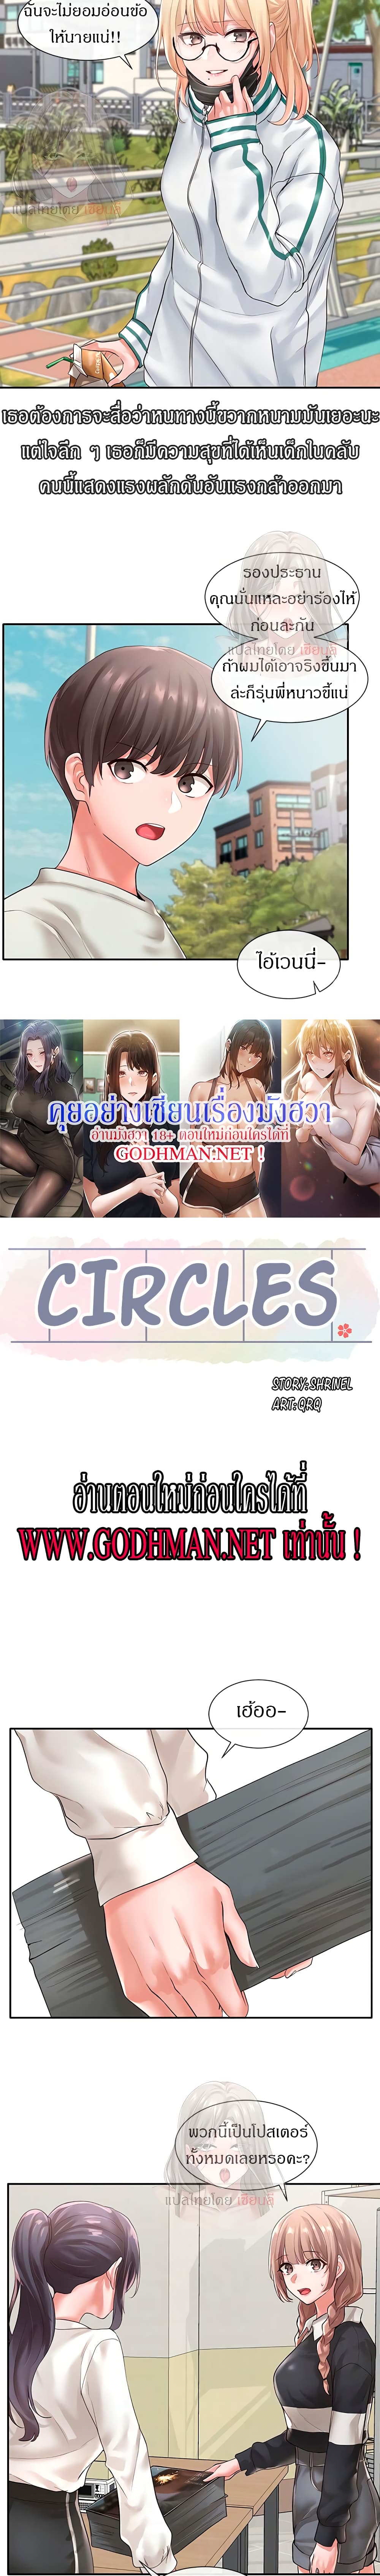 Theater Society (Circles) 51 09